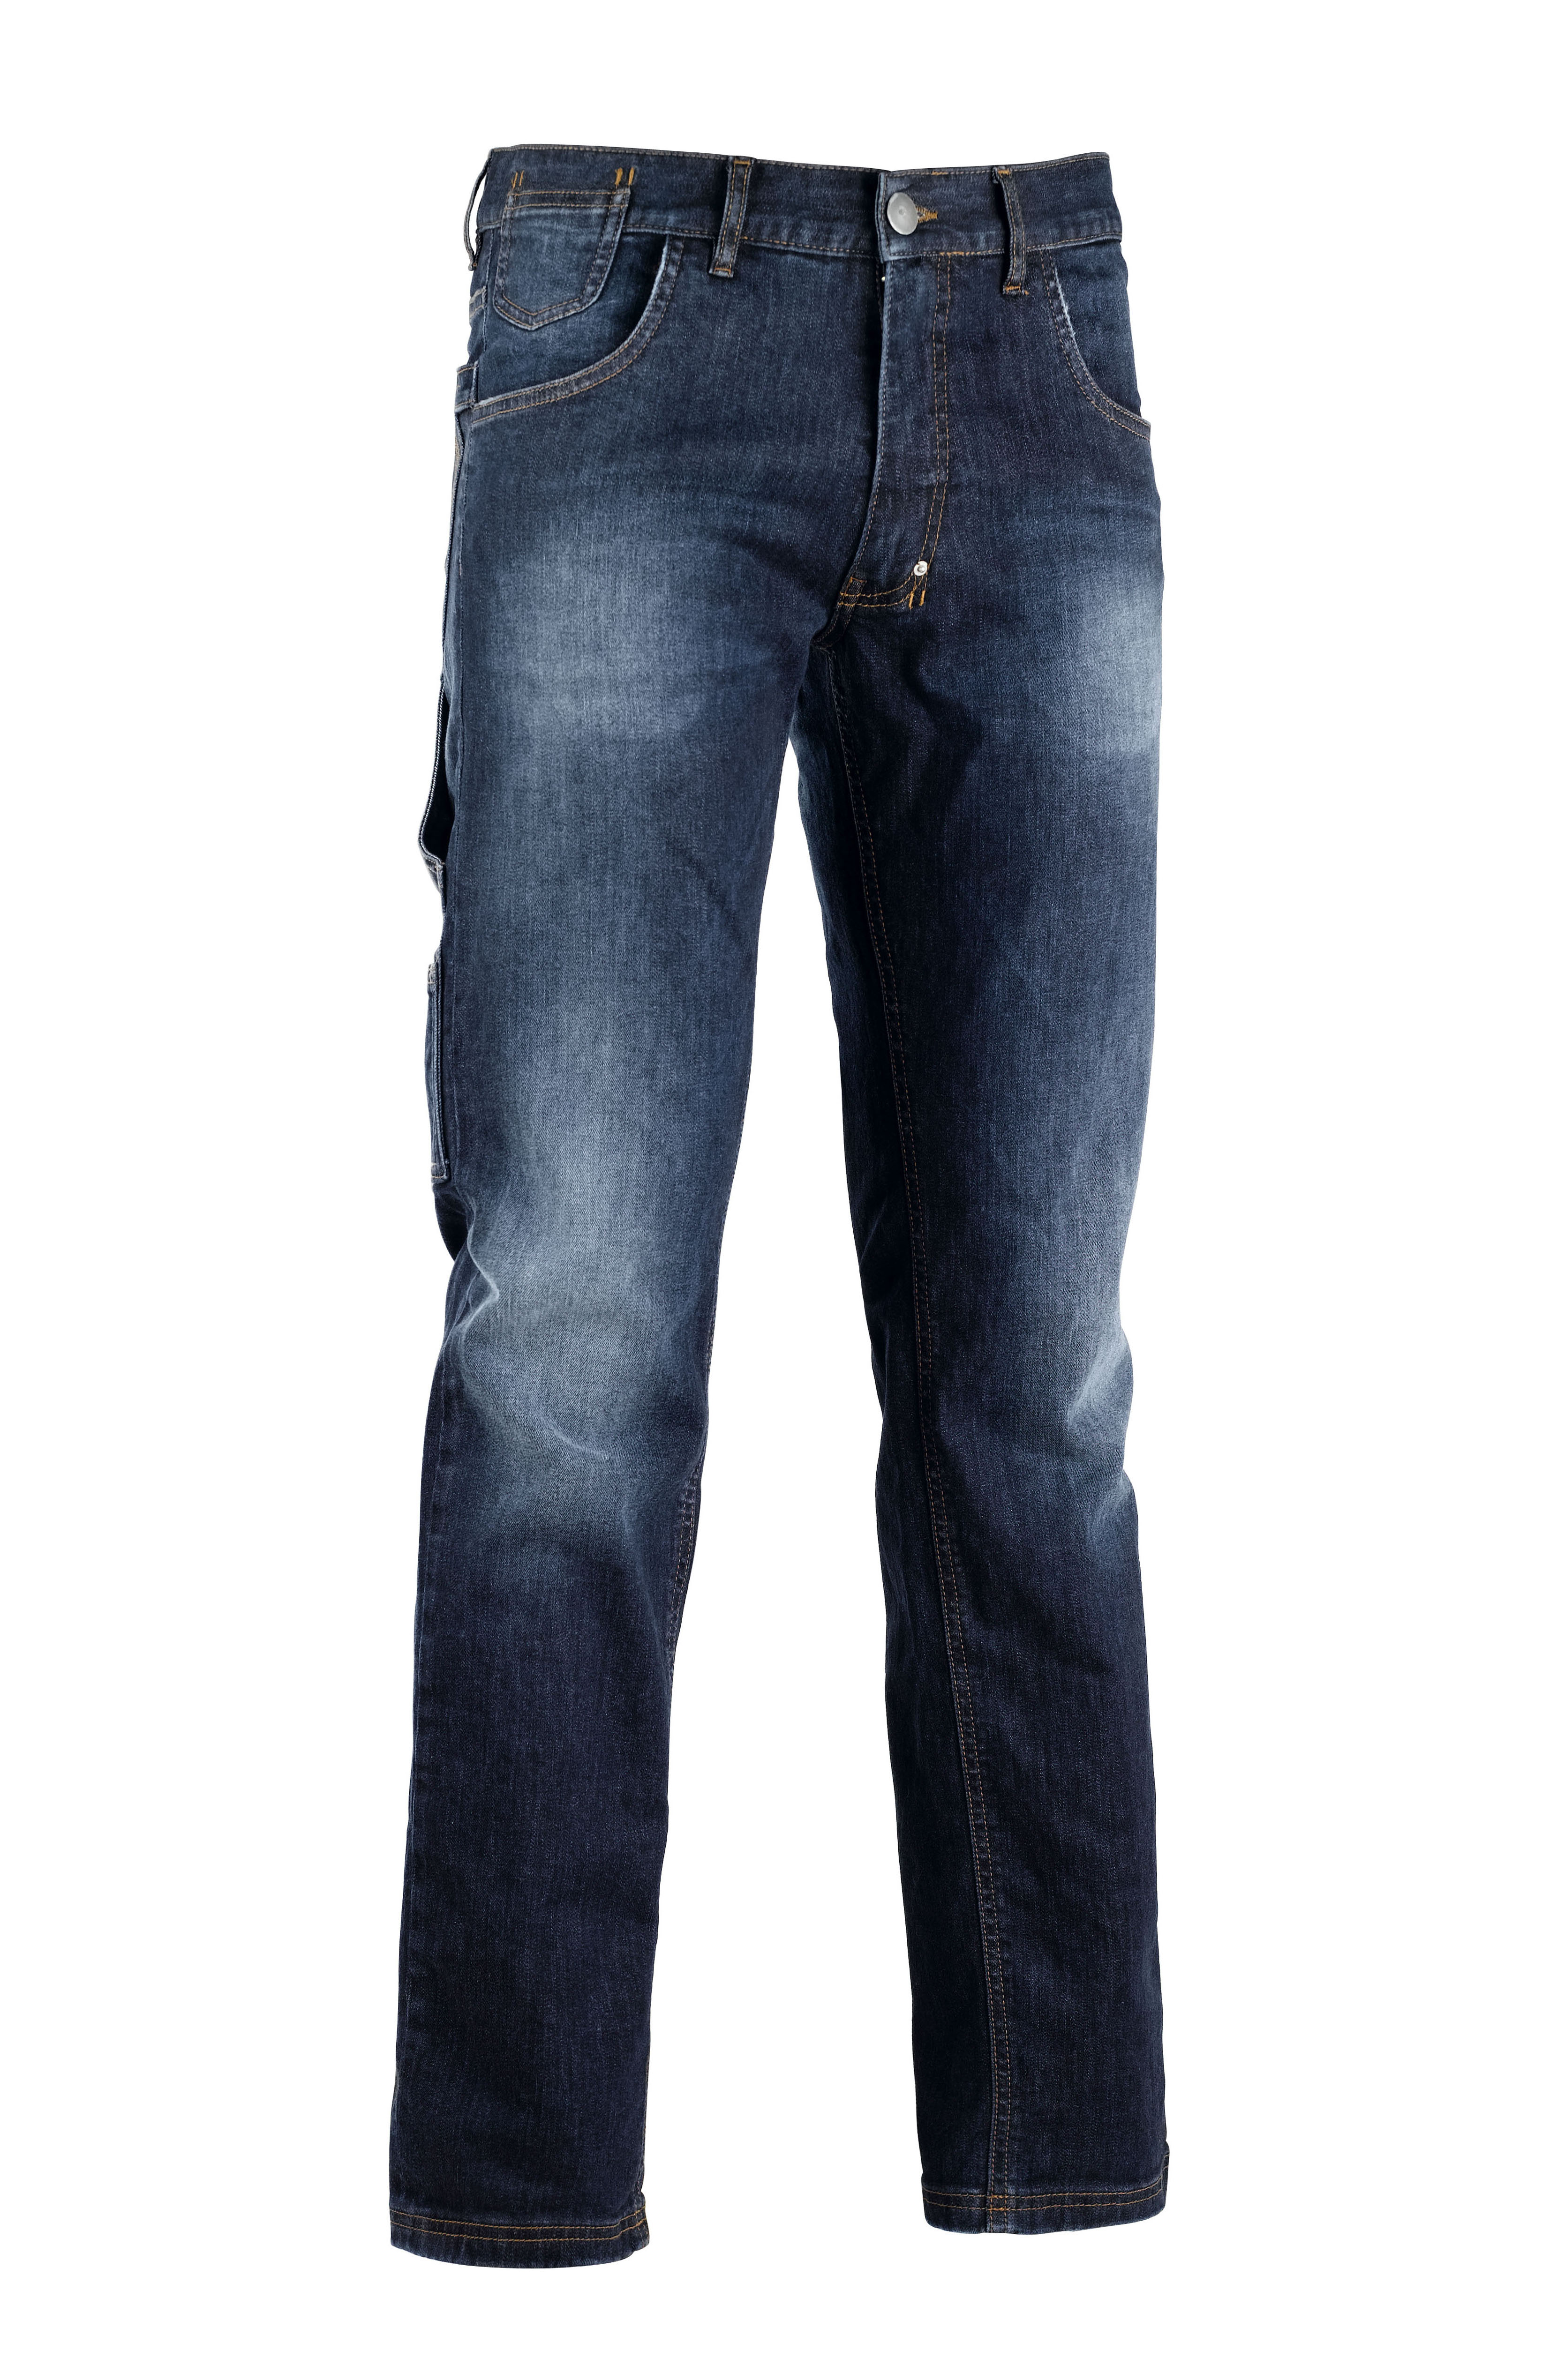 Pantalone stone blu jeans lavato tg xl